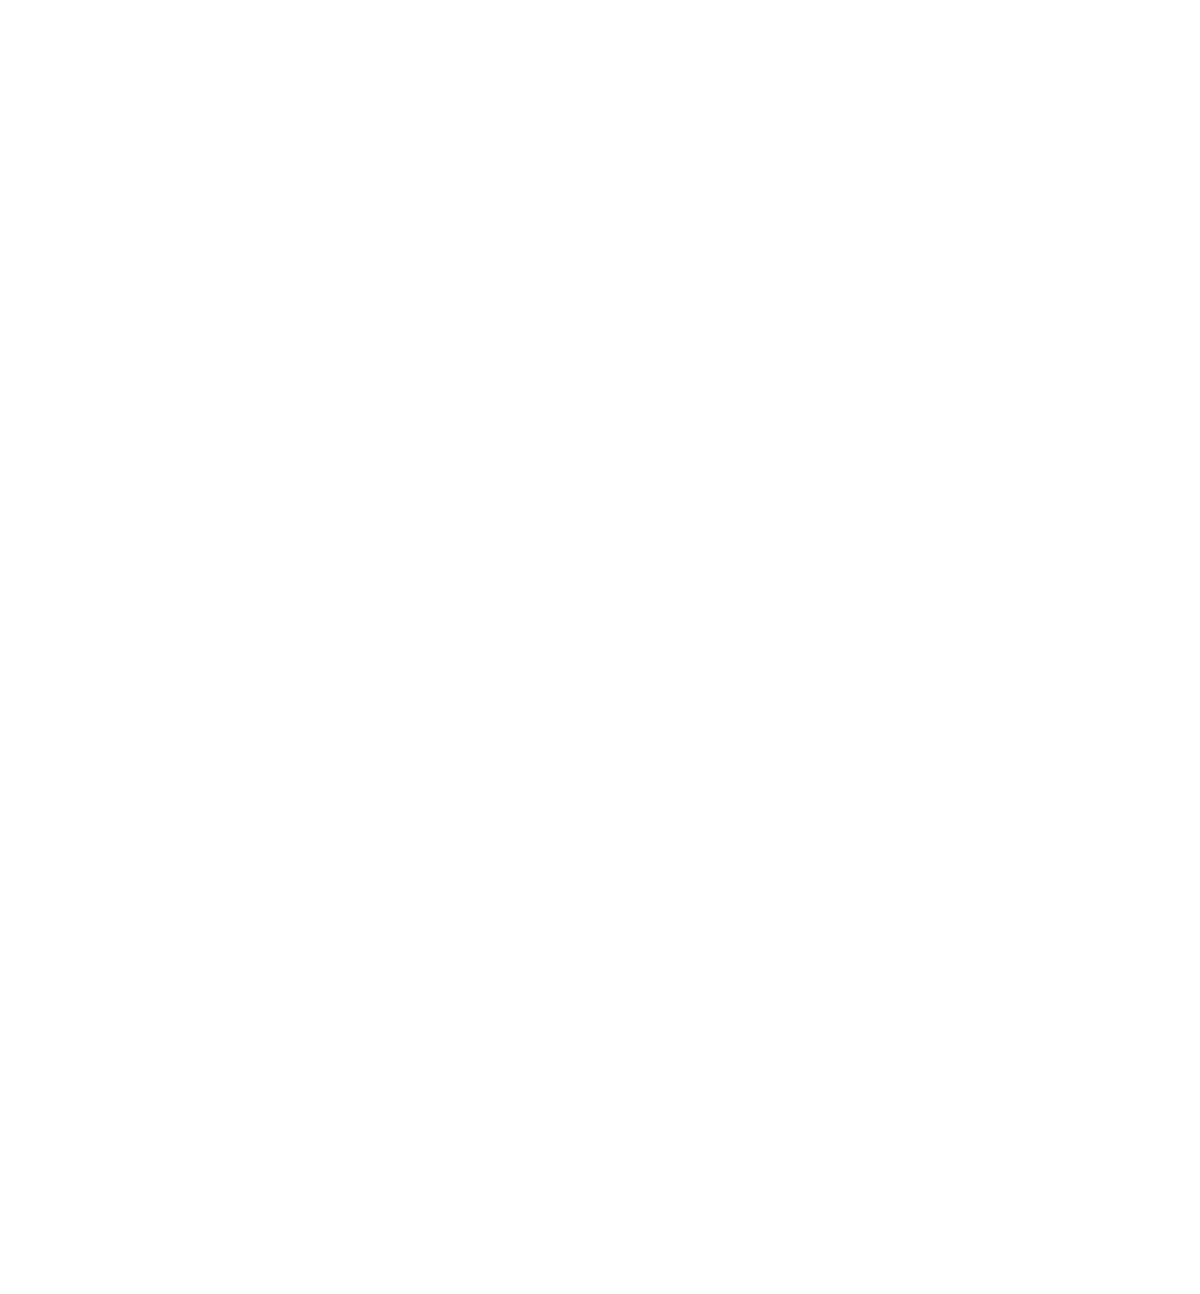 NSW_gov